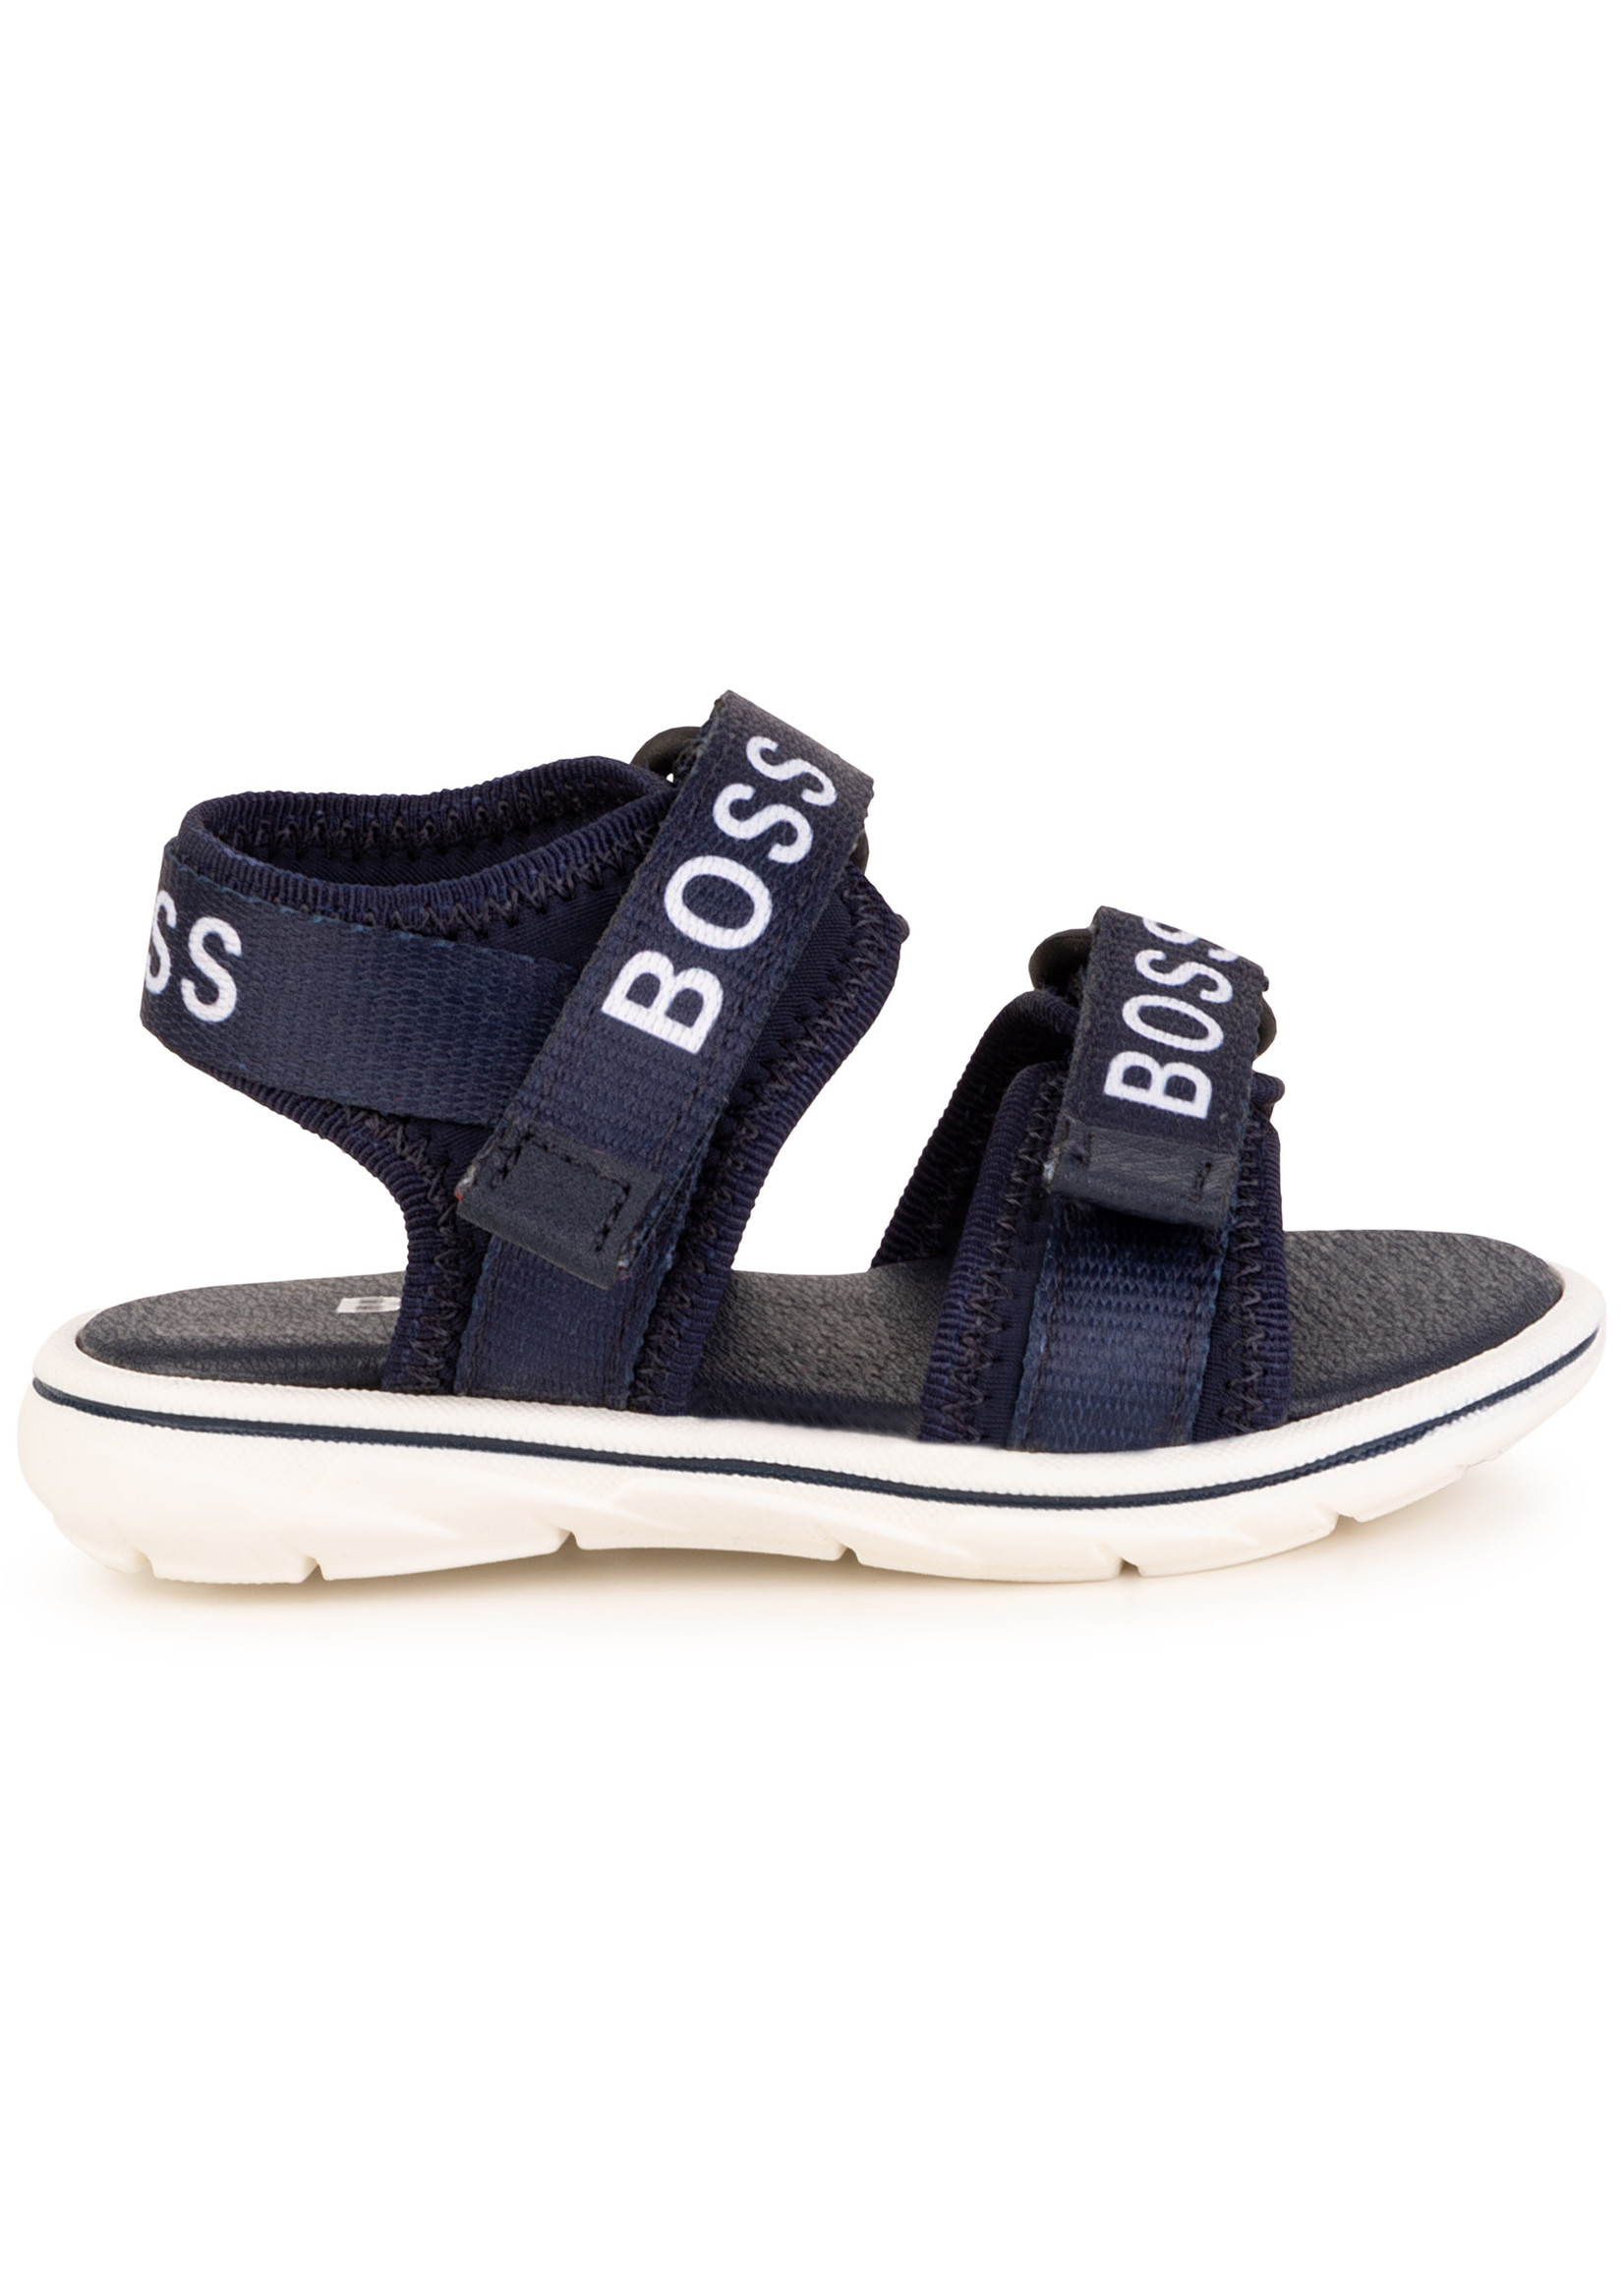 BOSS BOSS Babyboy sandals navyblue - J09174